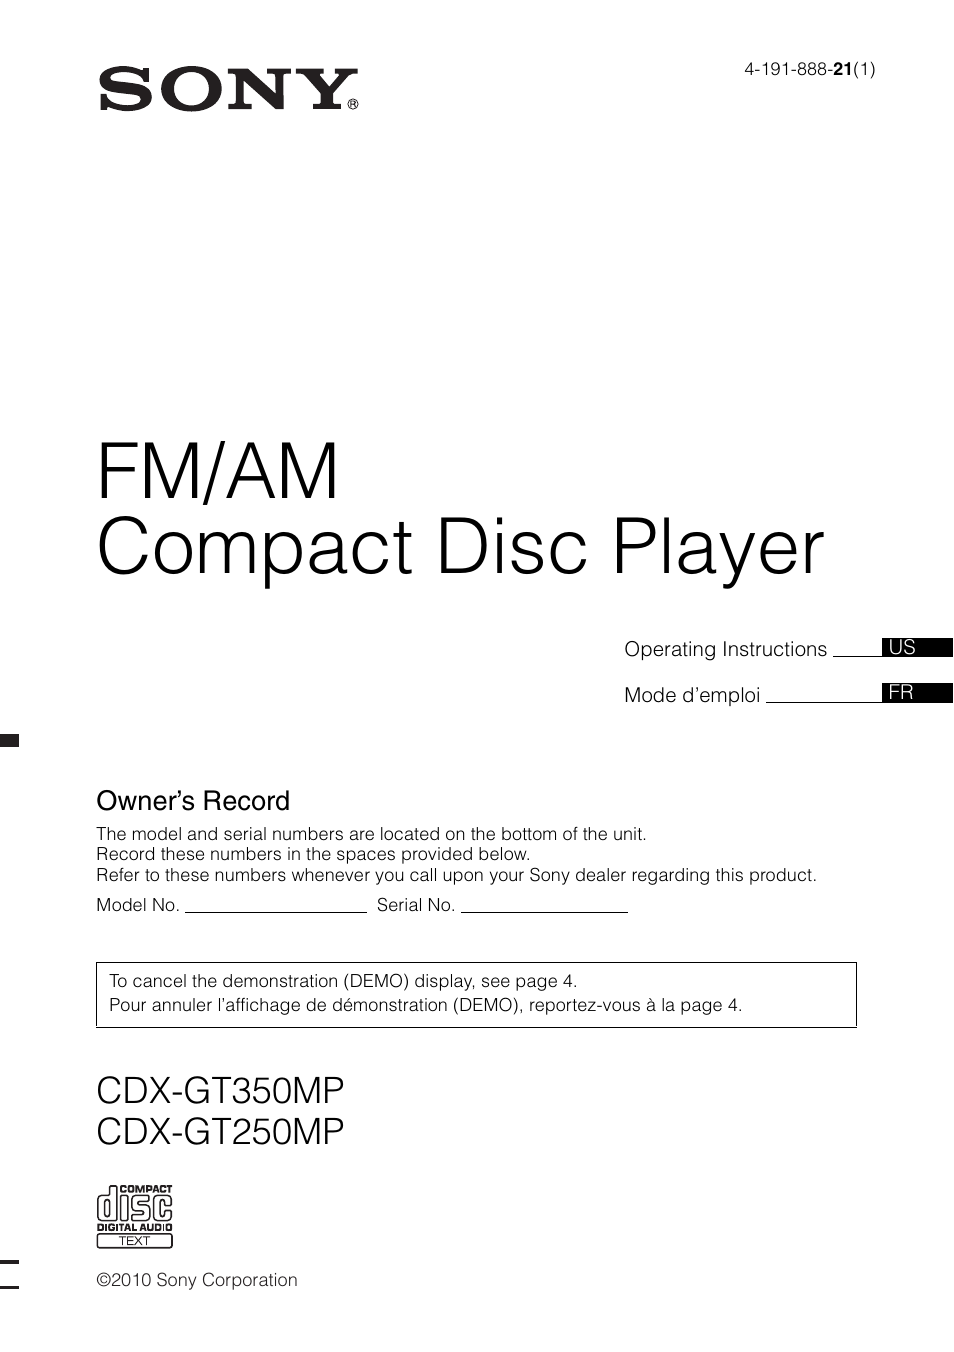 Sony CDX-GT250MP Manuel d'utilisation | Pages: 36